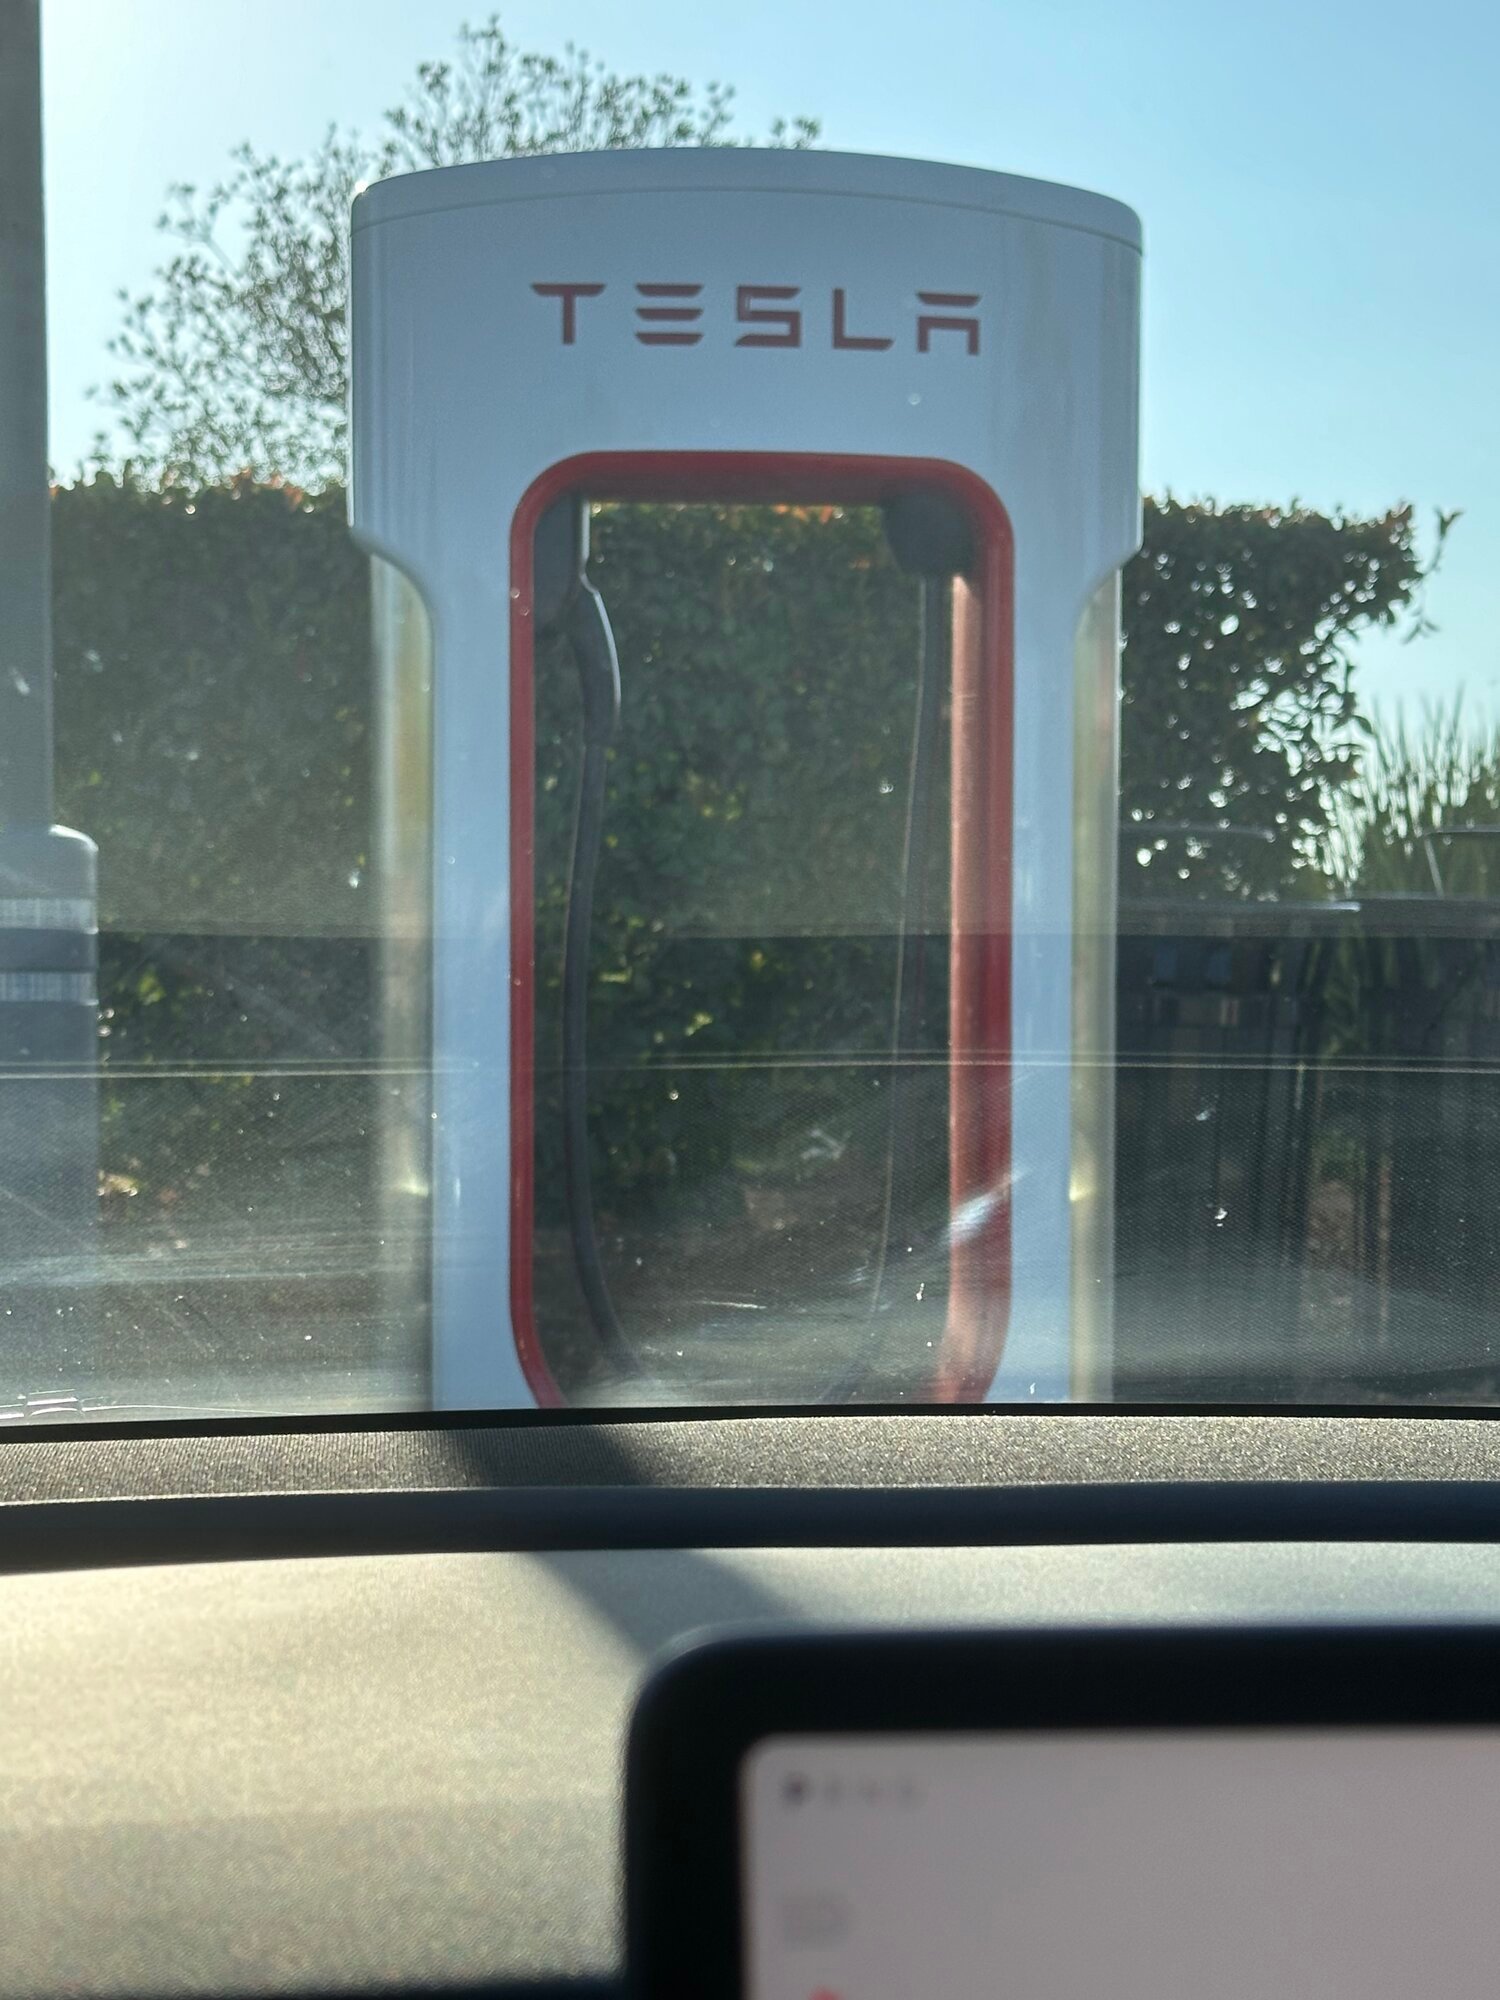 Tesla installs more Magic Docks, this time in California